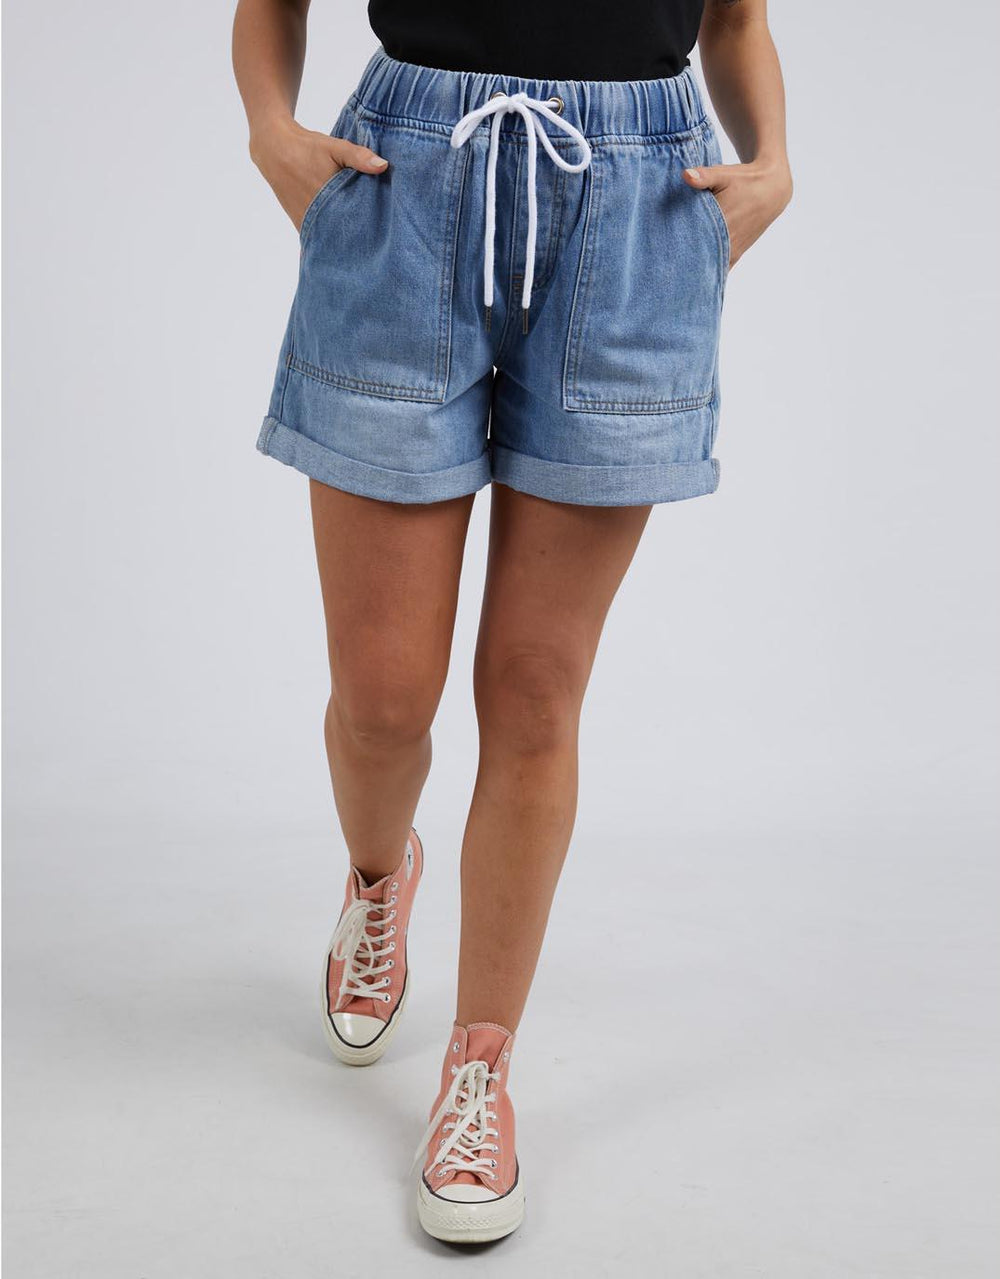 REVESST JEANS Women Denim Shorts for Sale Australia| New Collection Online|  SHEIN Australia